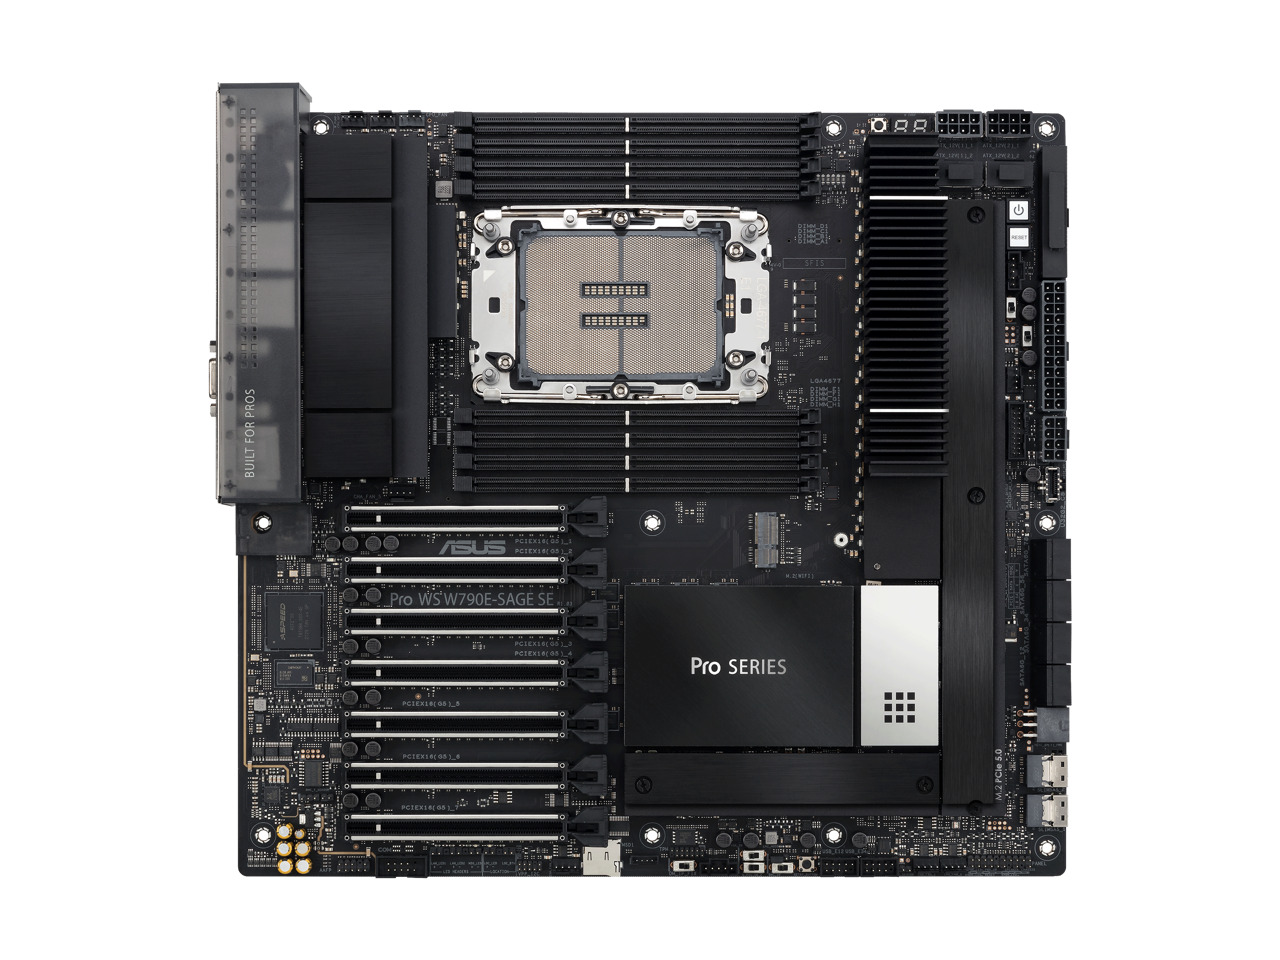 ASUS Pro WS W790 SAGE SE Intel W790 (LGA 4677) CEB, PCIe 5.0,7 PCIe 5.0 x16 slot